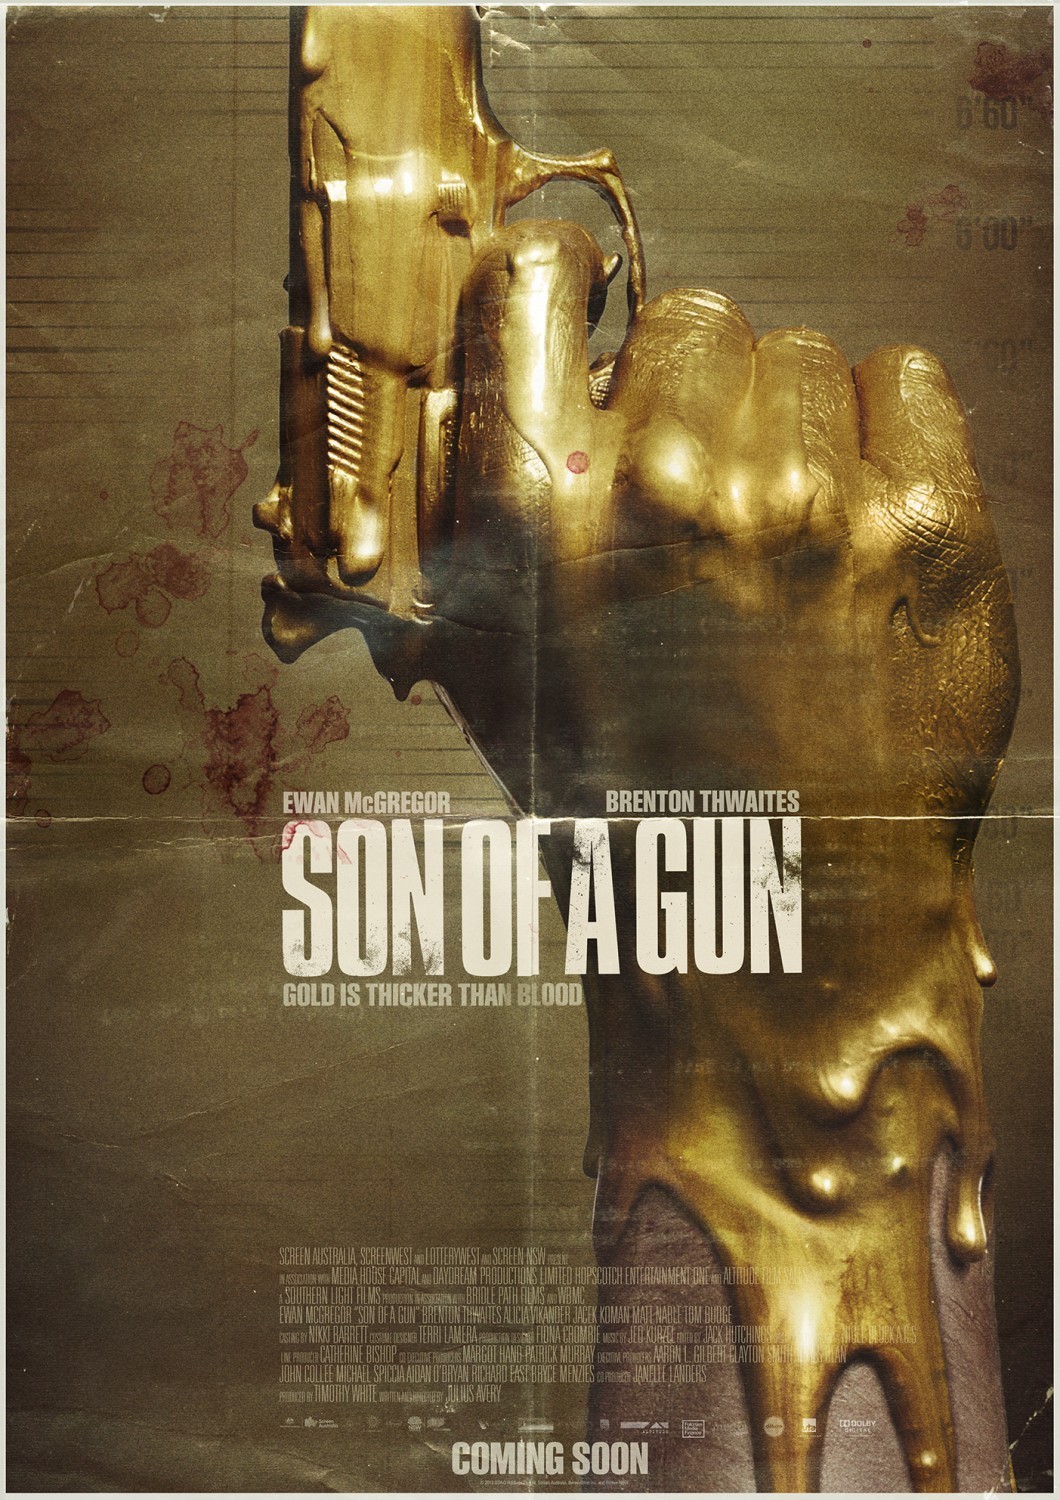 Poster of A24's Son of a Gun (2015)